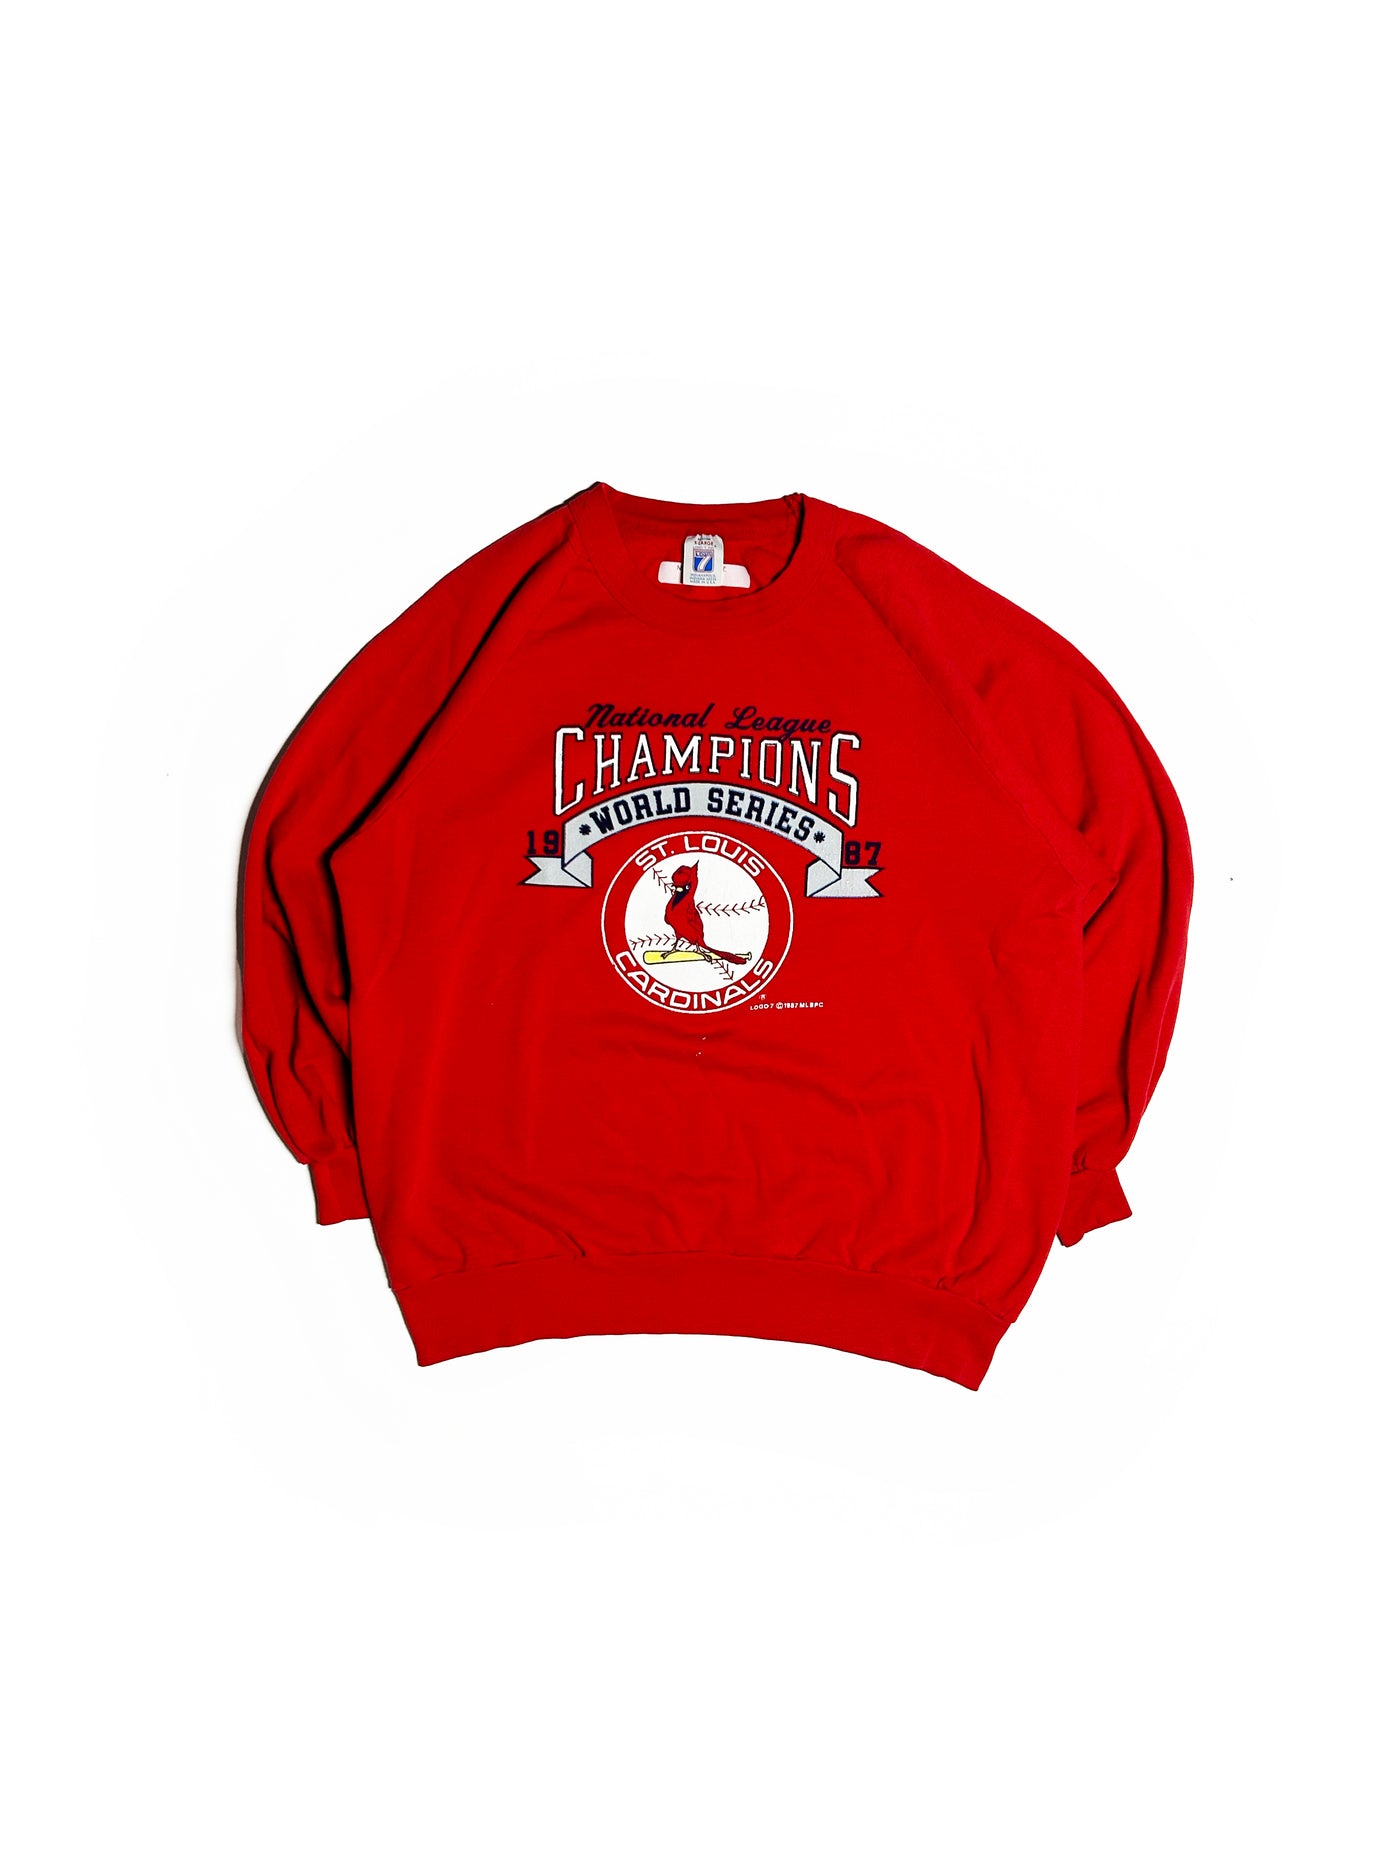 Vintage 1987 St.Louis Cardinals World Series Champions Crewneck